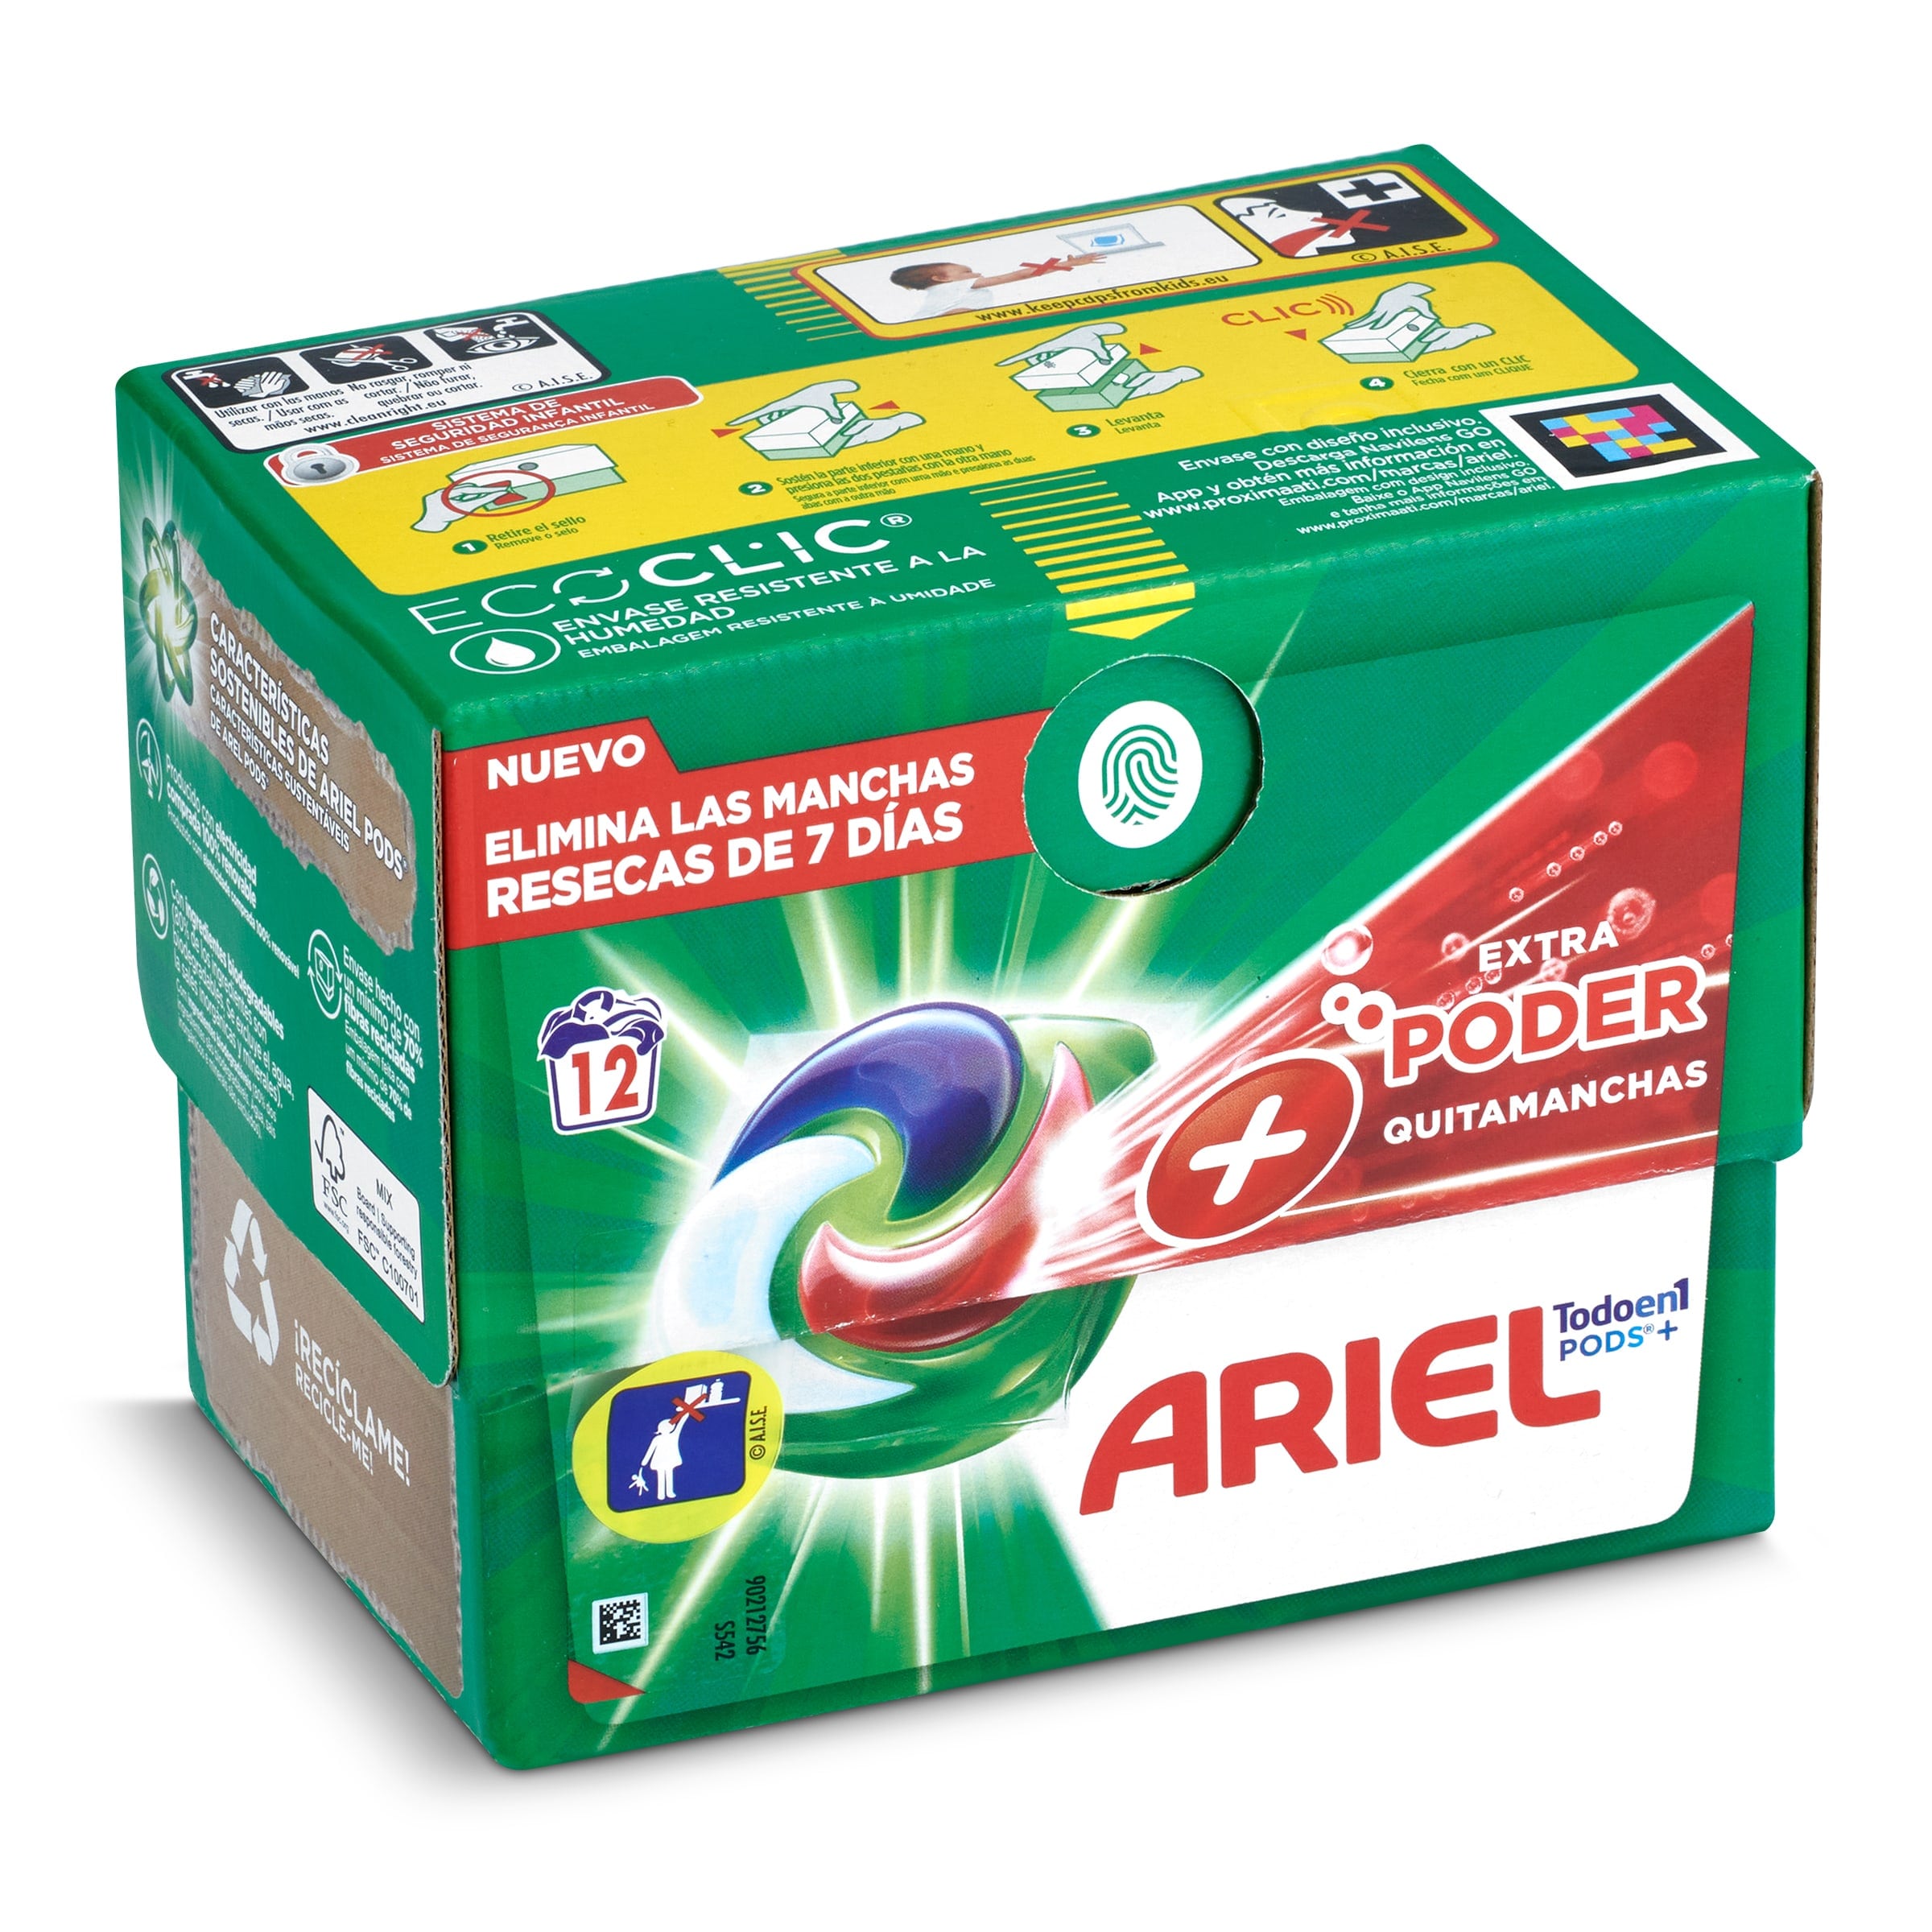 Ariel Pods+ Estra Poder Quitamanchas Detergente elimina manchas resecas  incluso en frío 12 cápsulas